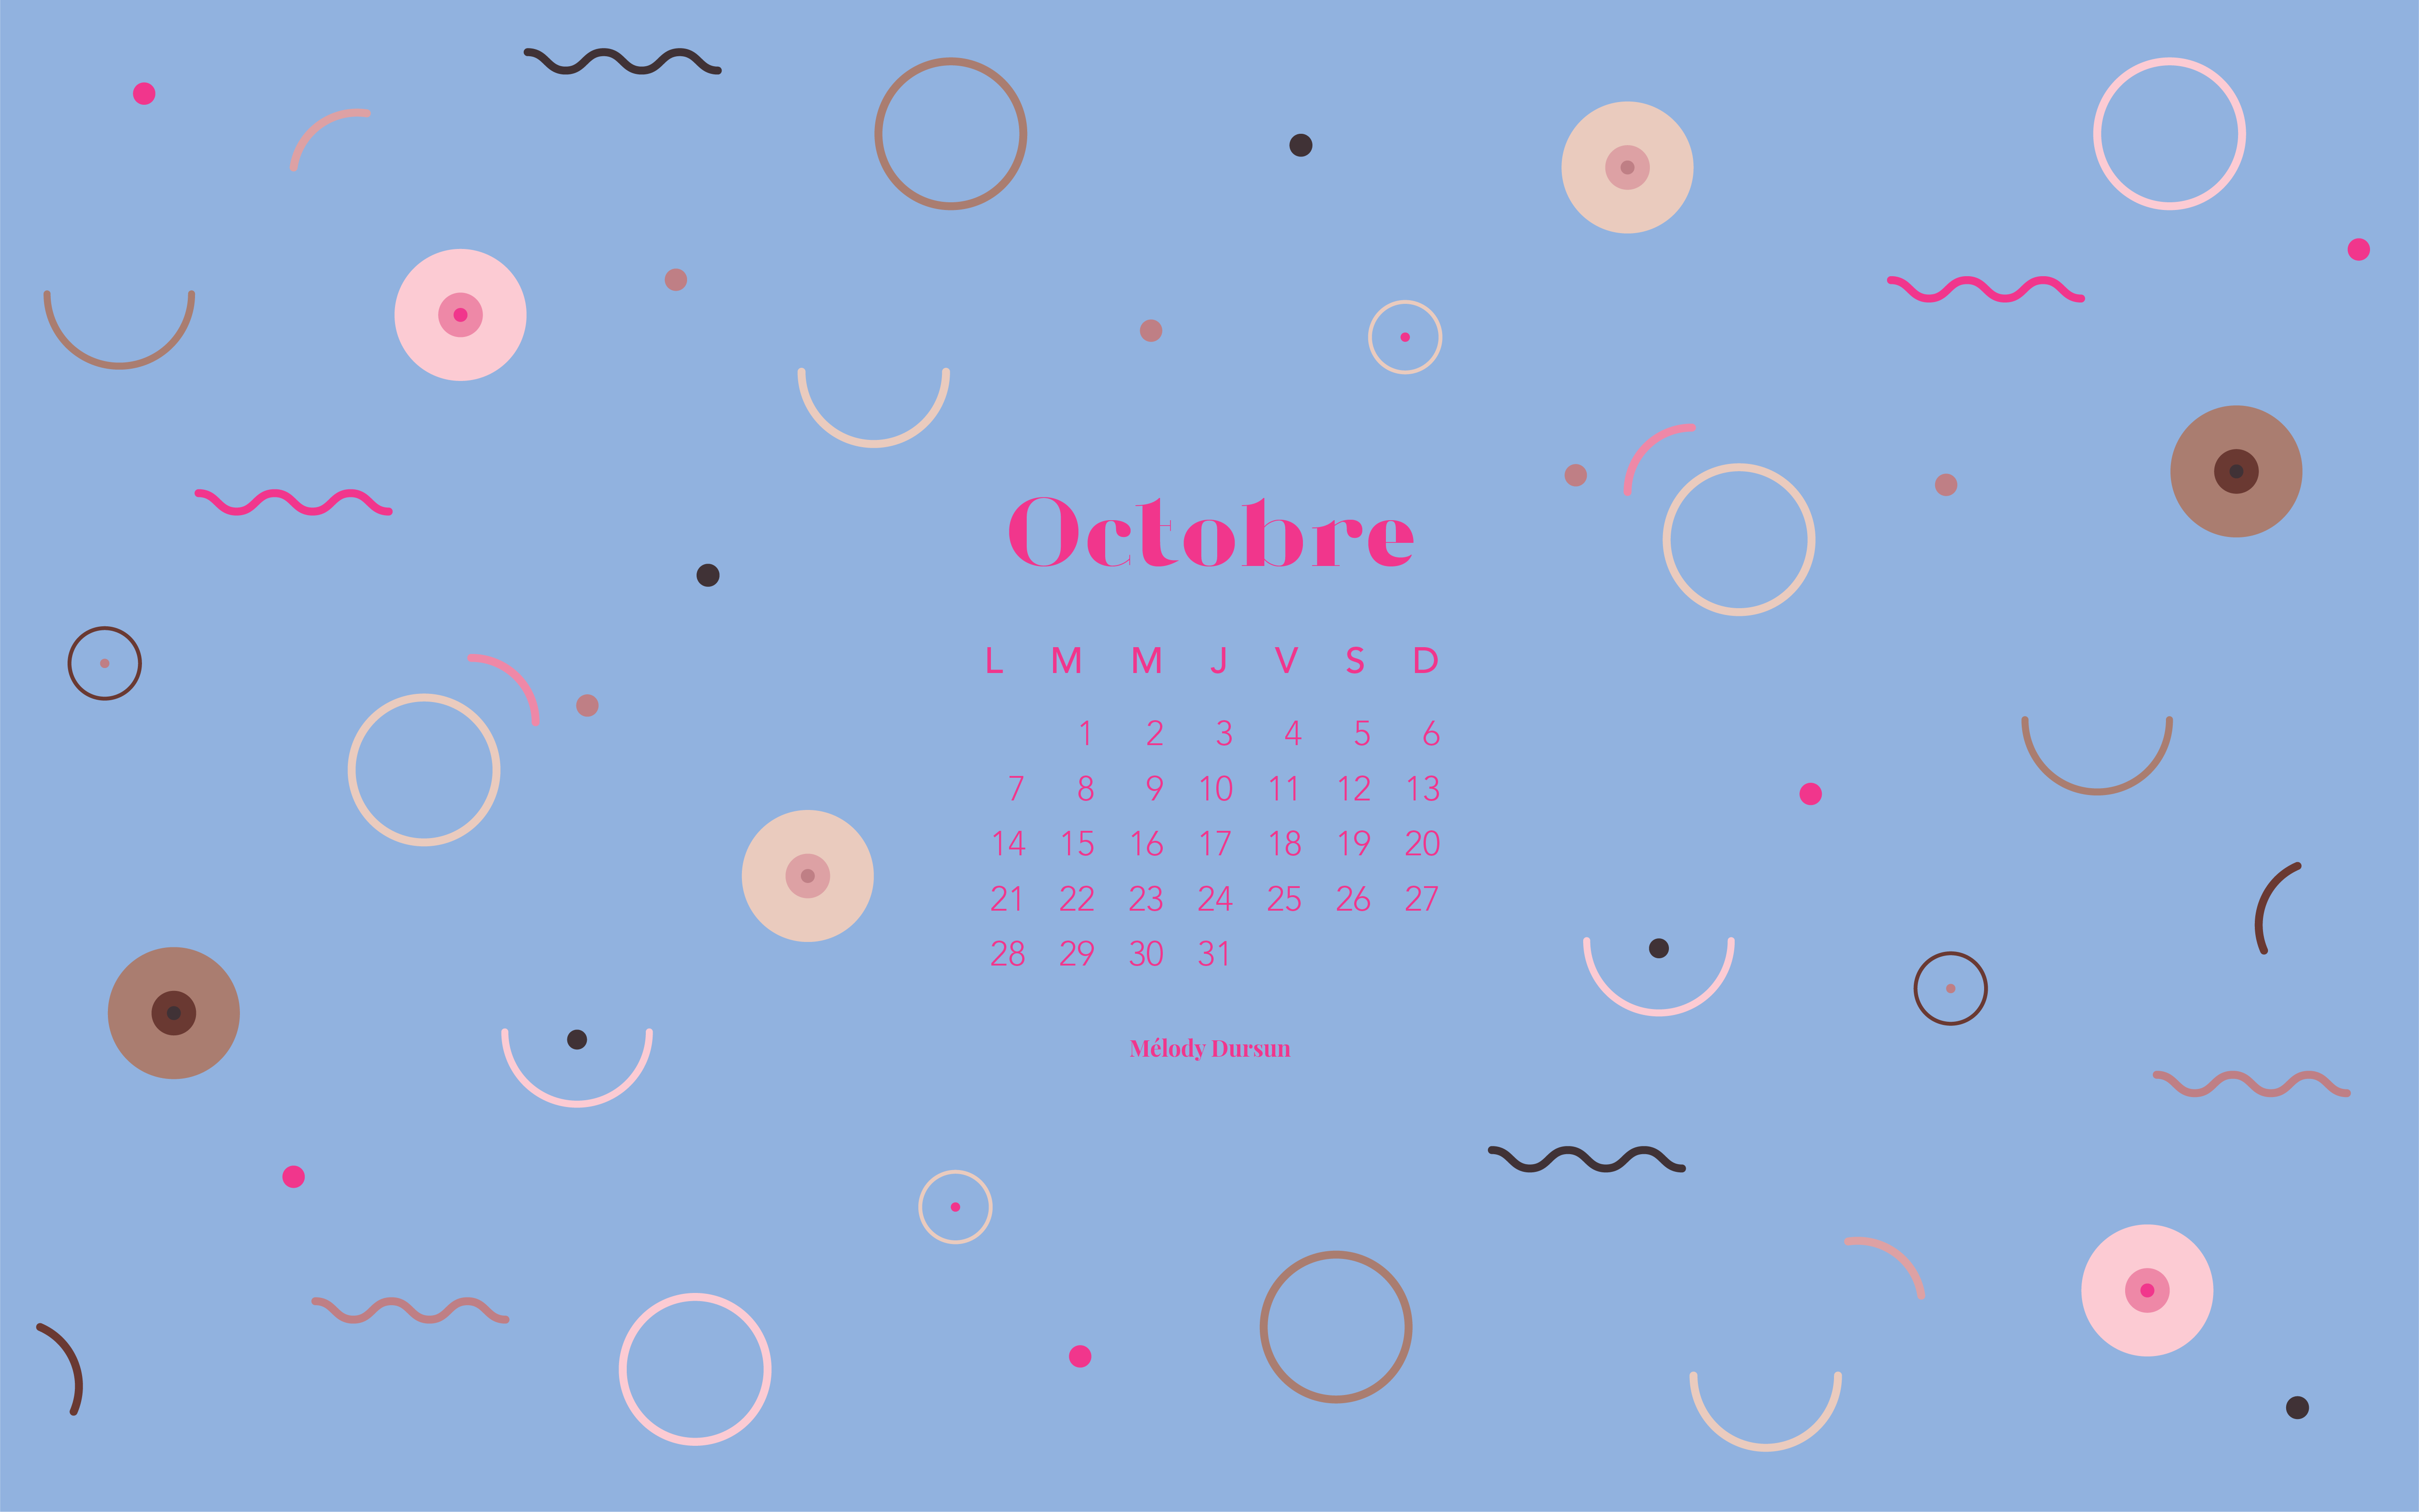 olecoeur-melodydursun-calendrier-wallpaper-octobre2019_Desktop